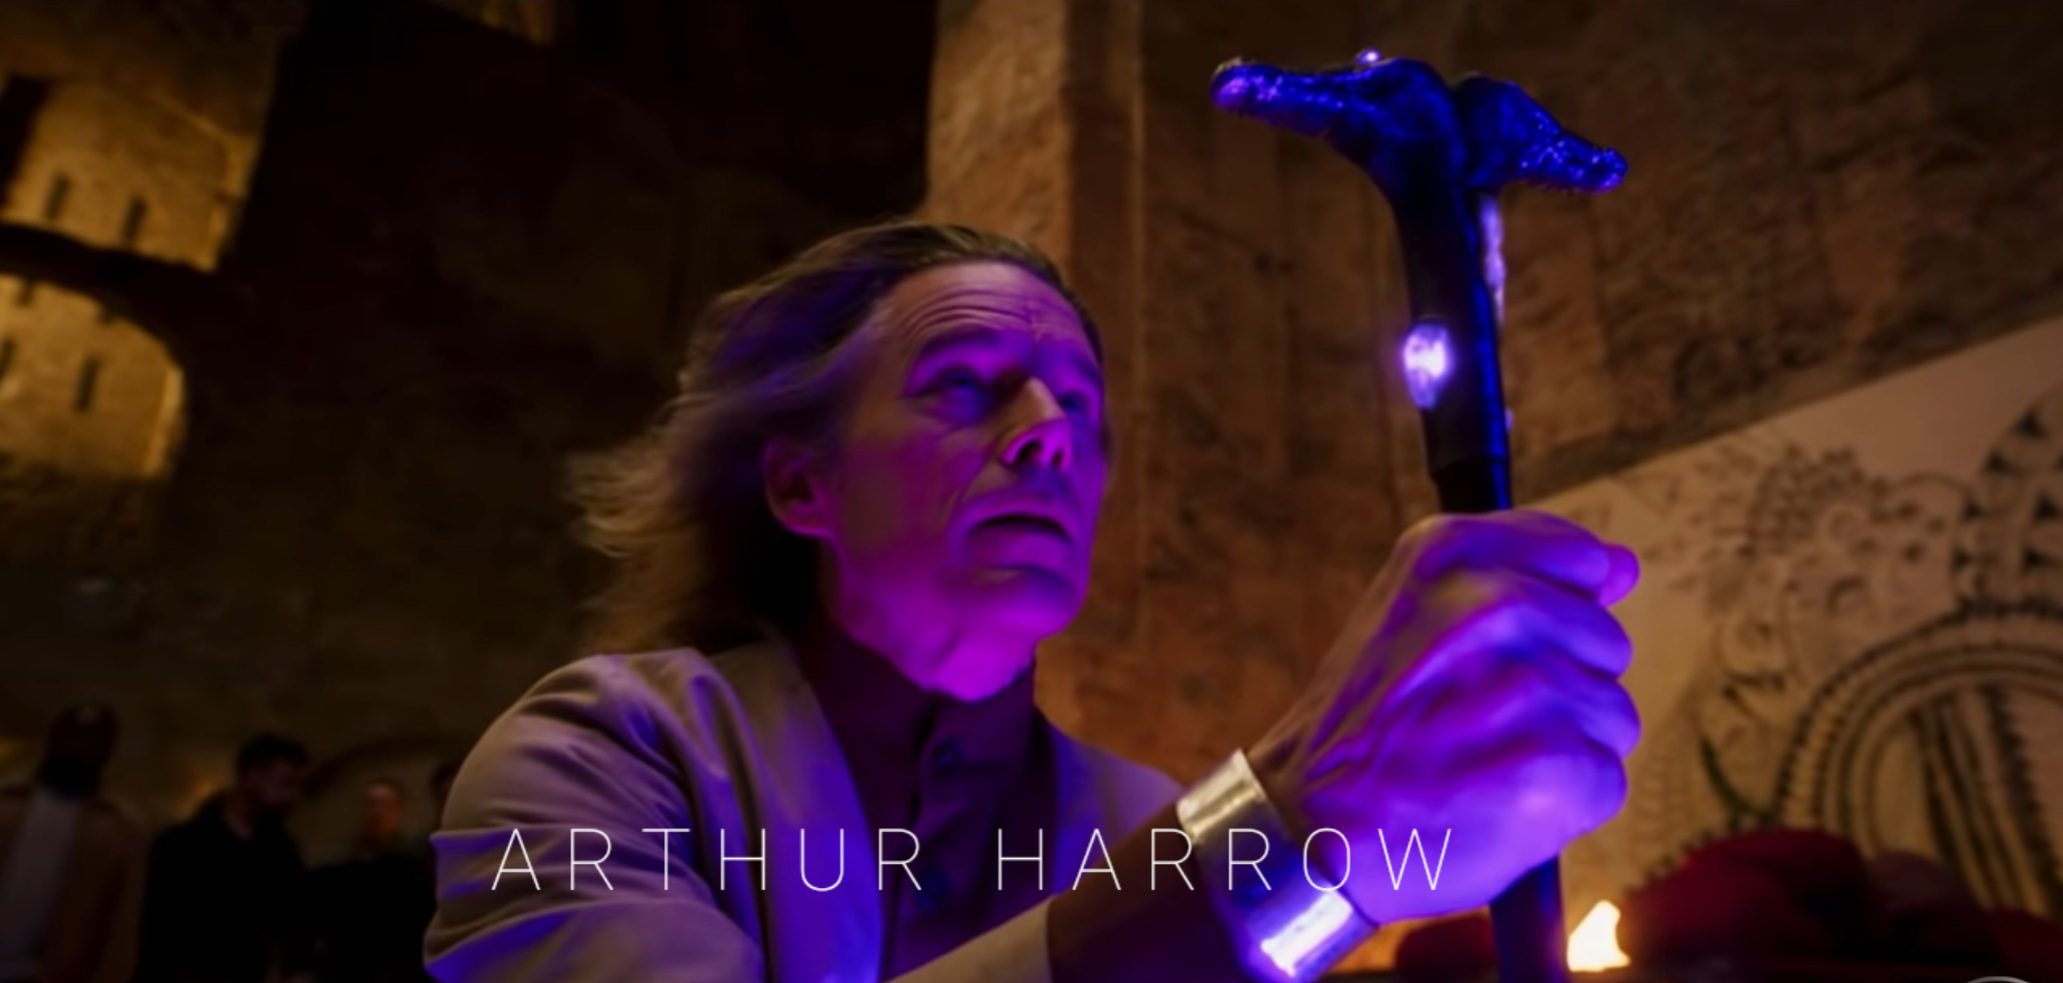 Who is Arthur Harrow in moon knight